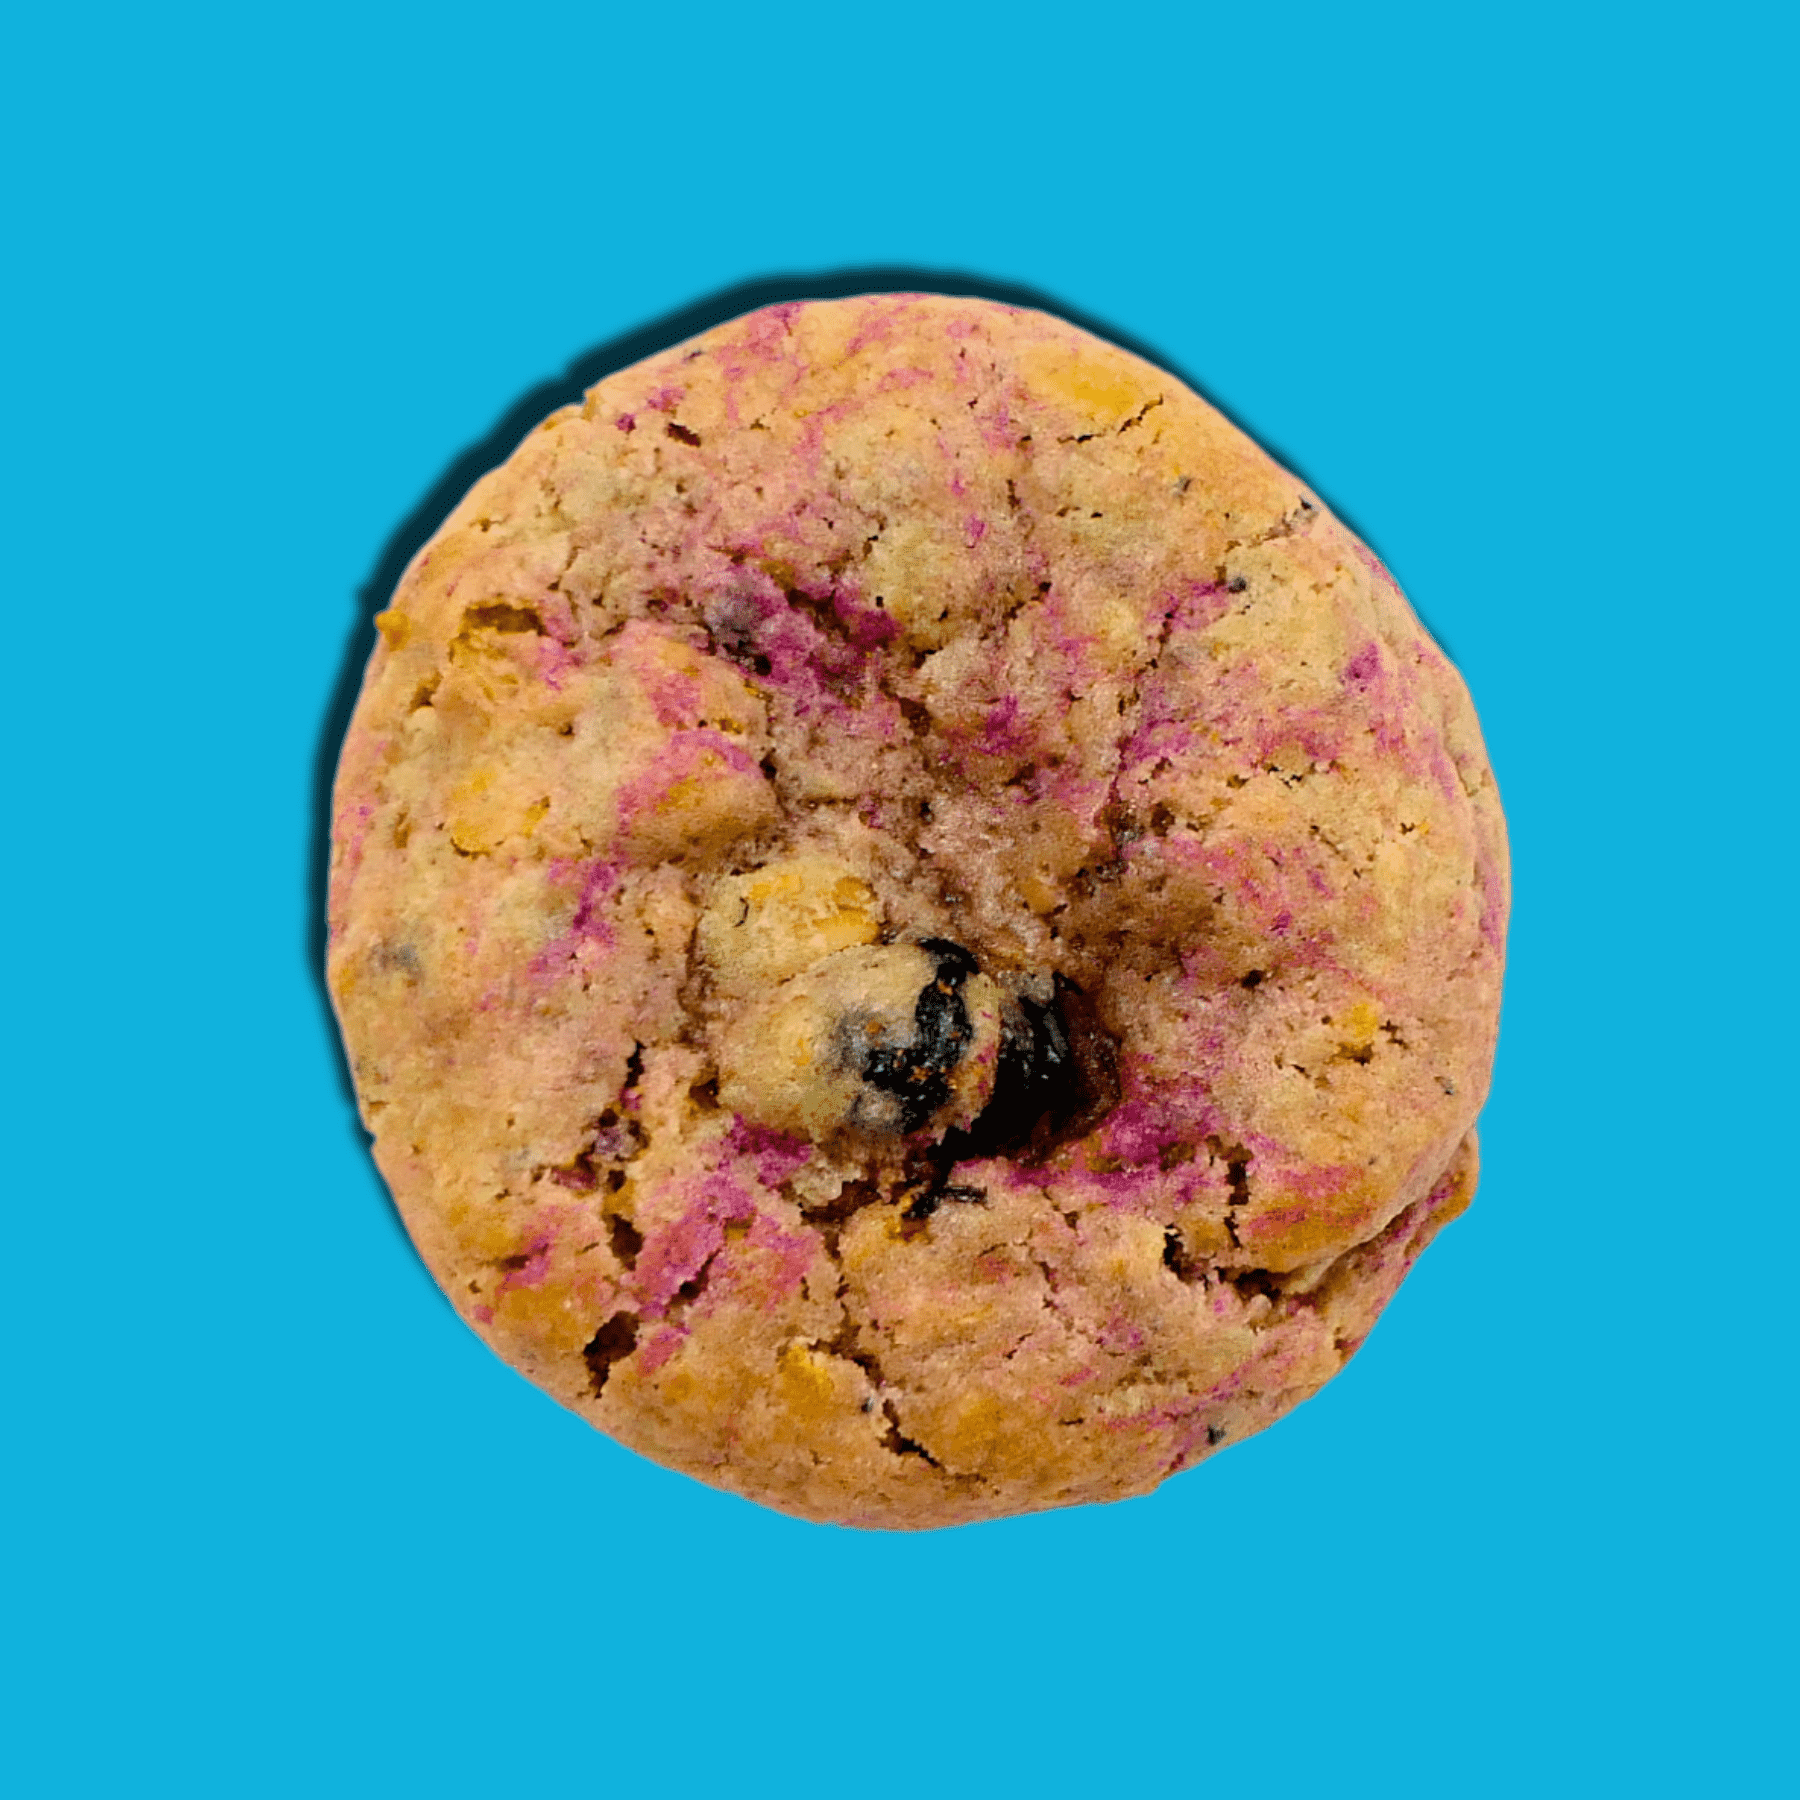 Blueberry Bash Cookies - 4 Cookies